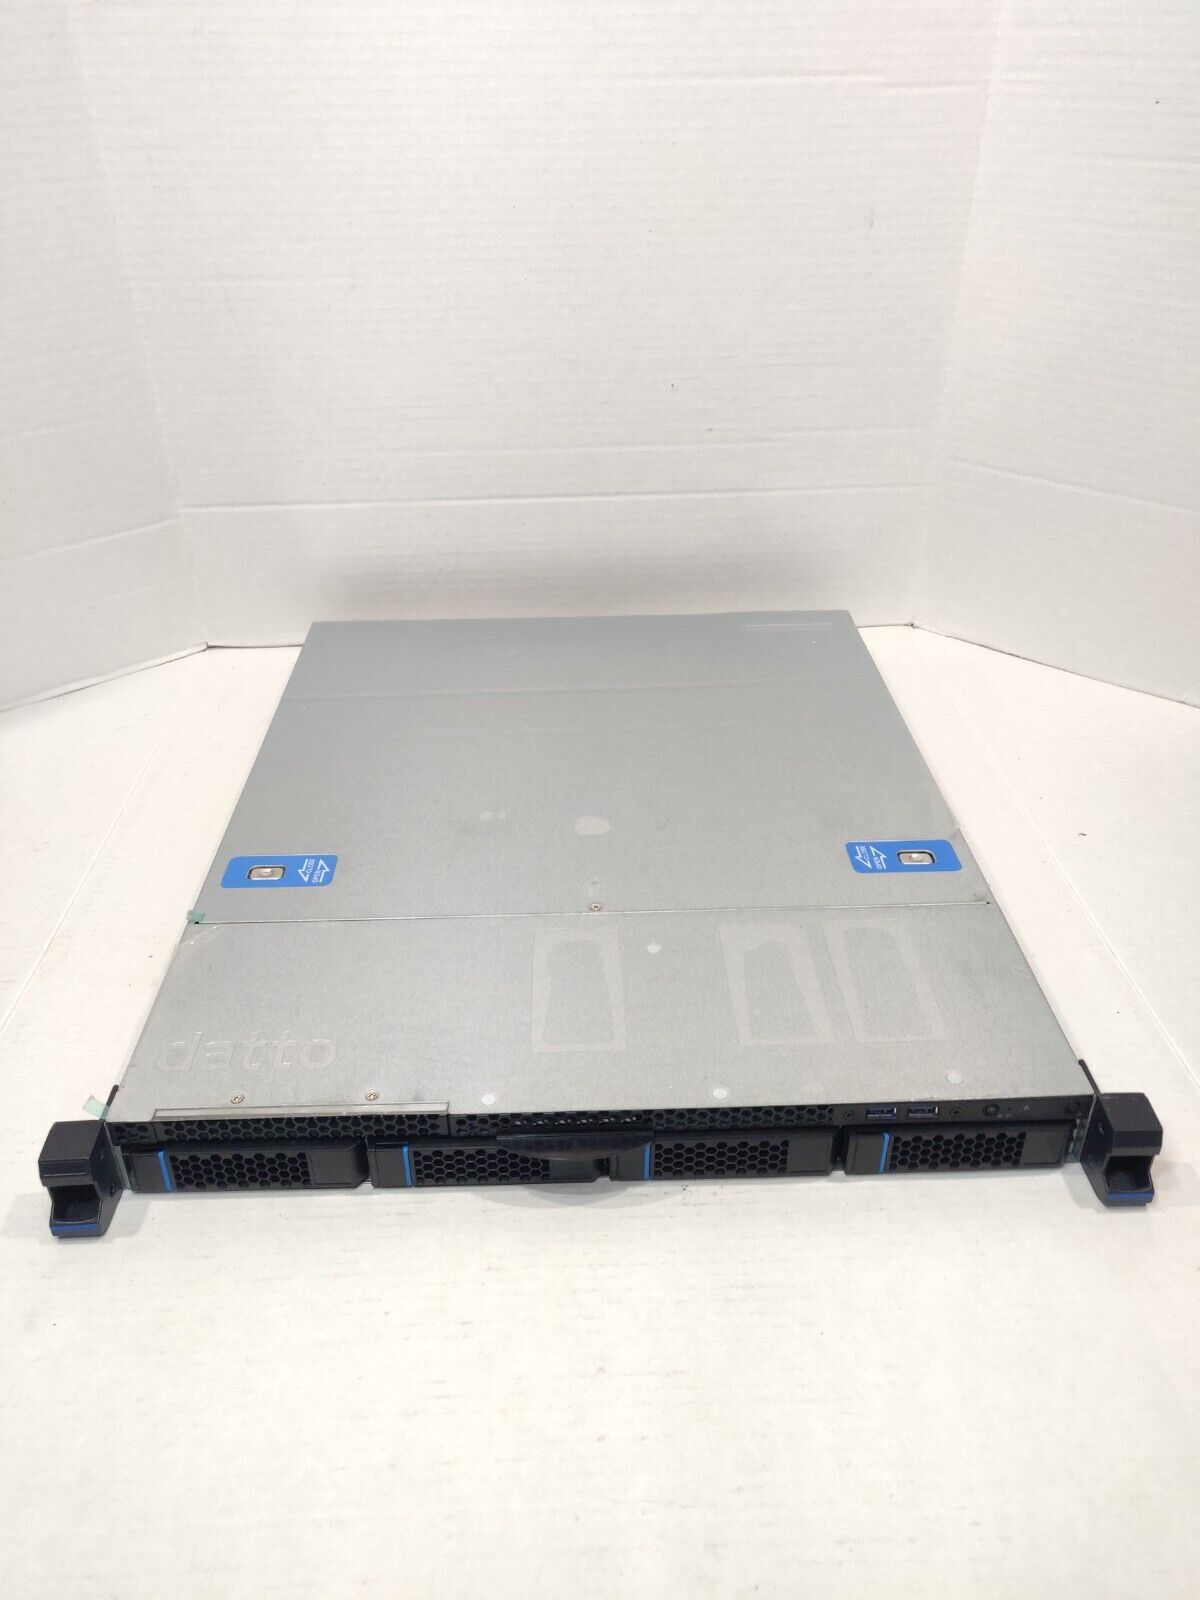 CHENBRO /DATTO RM14604H 1U Rackmount Server Chassis 4 Hot Swap SAS/SATA Bays